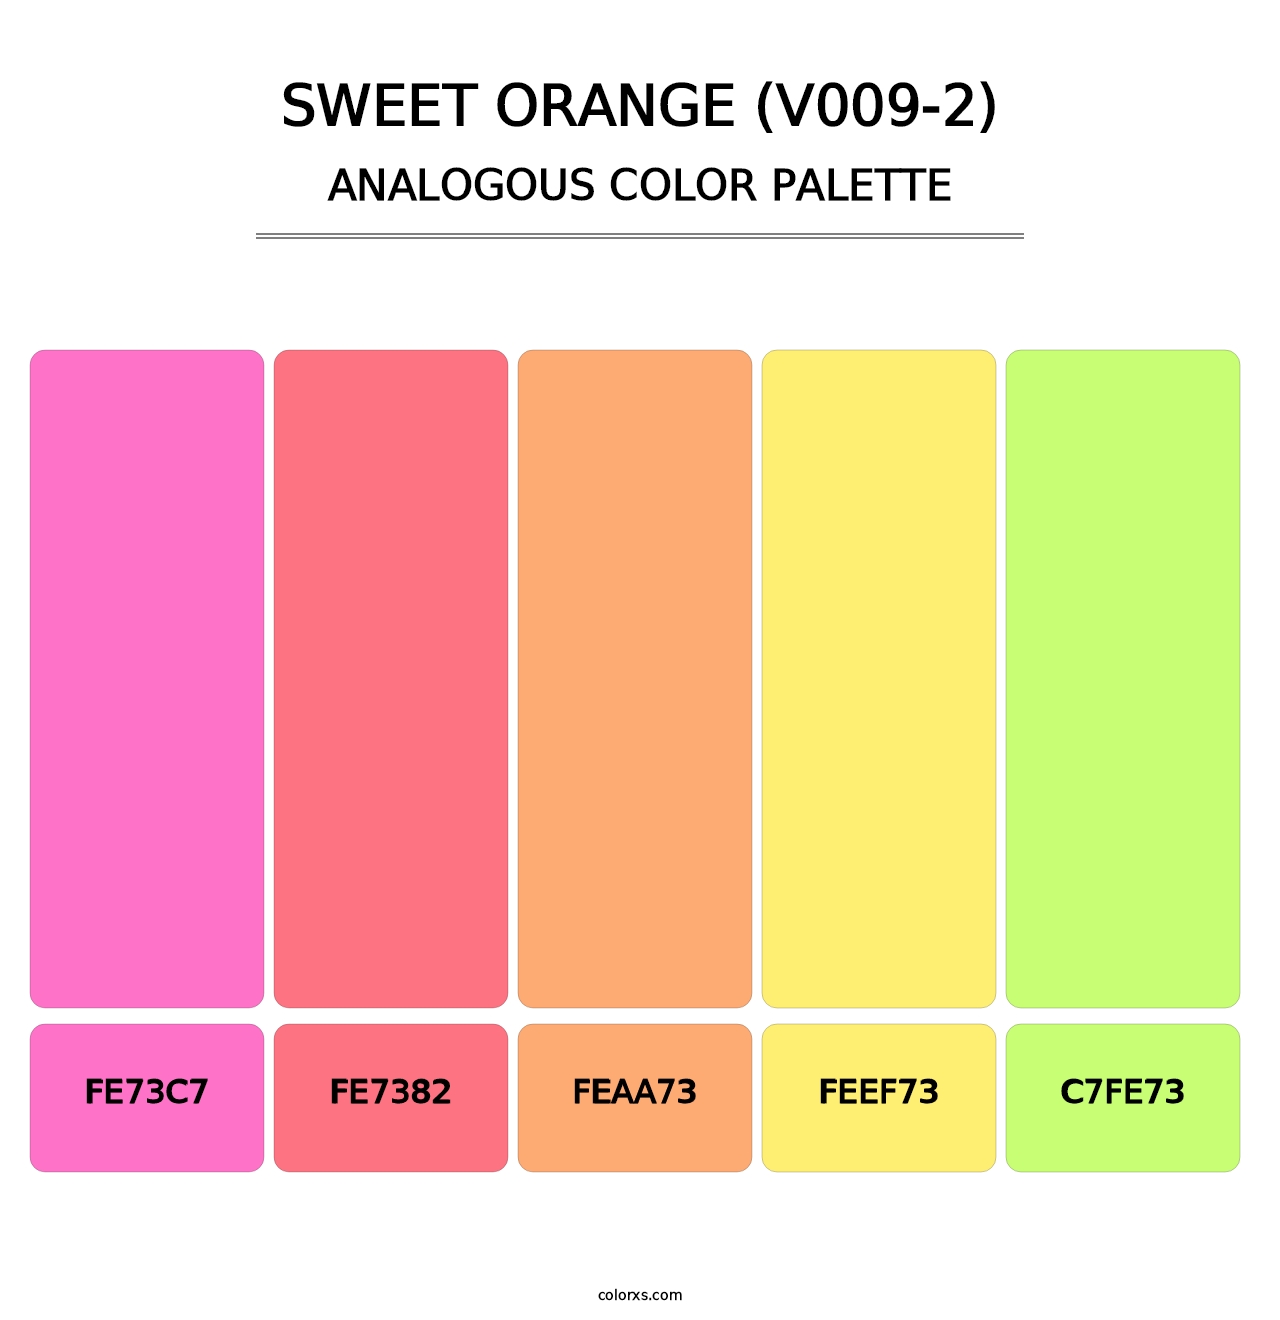 Sweet Orange (V009-2) - Analogous Color Palette